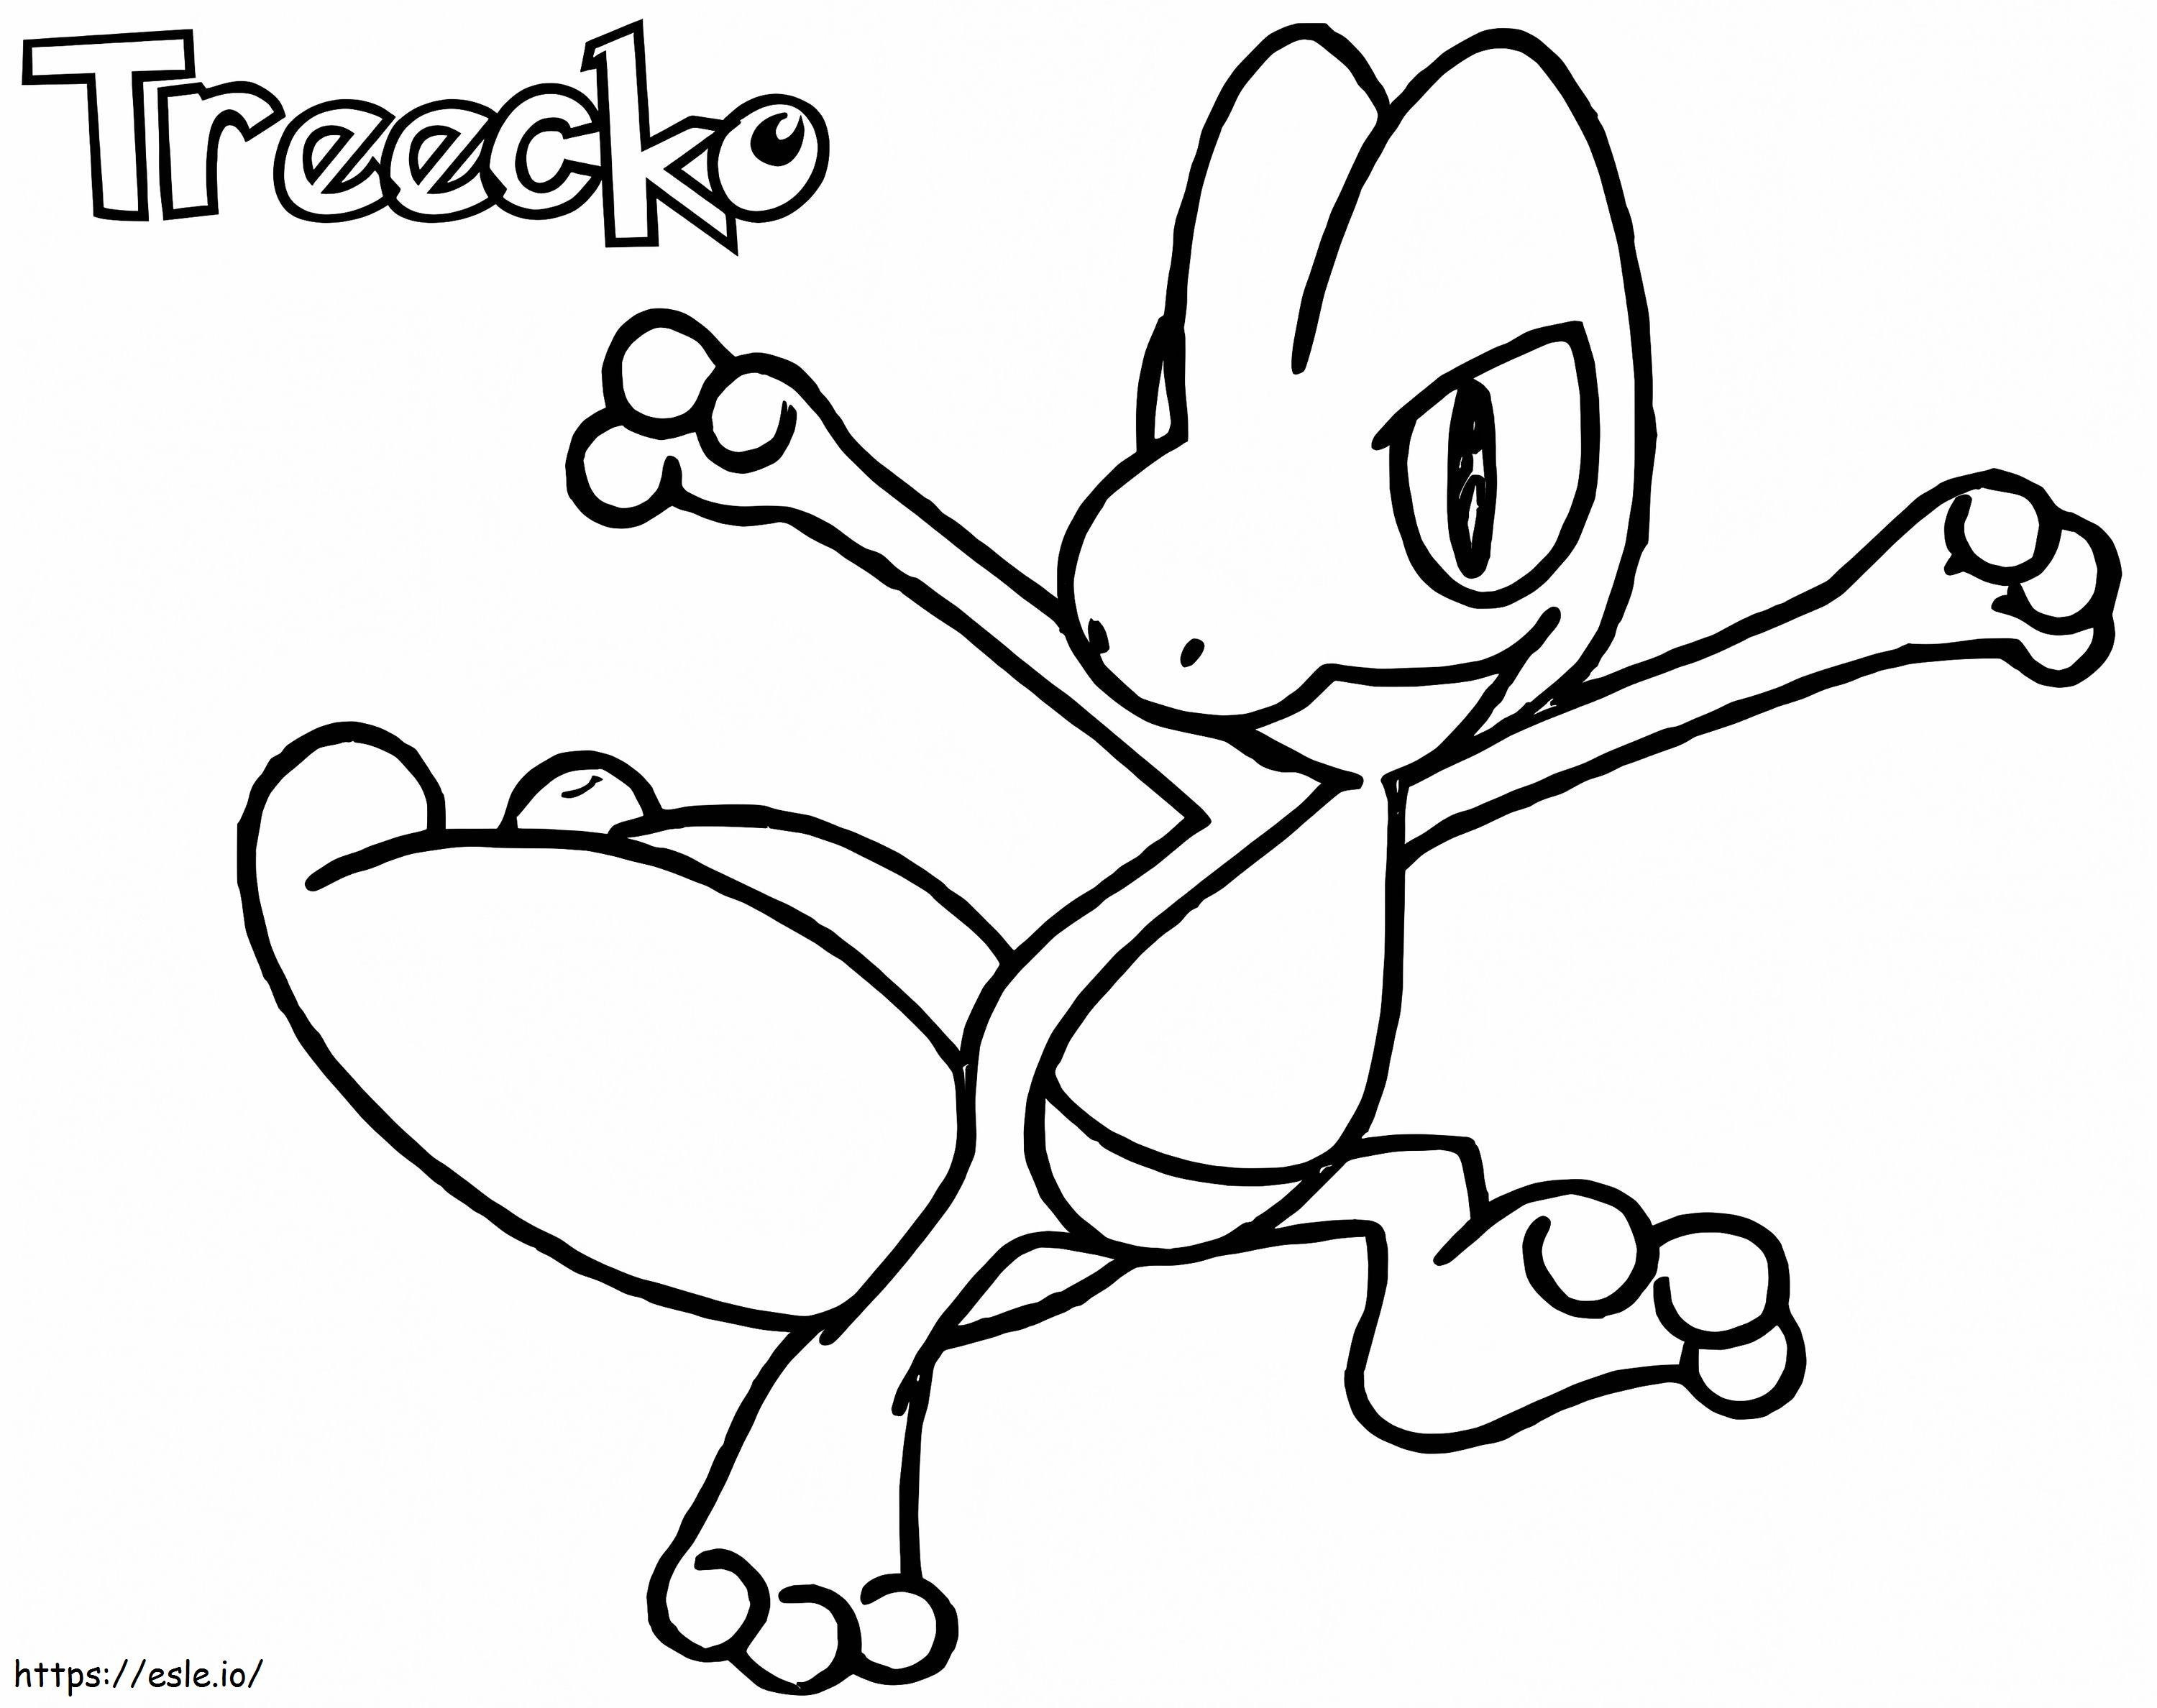 Coloriage Pokémon Treecko imprimable à imprimer dessin